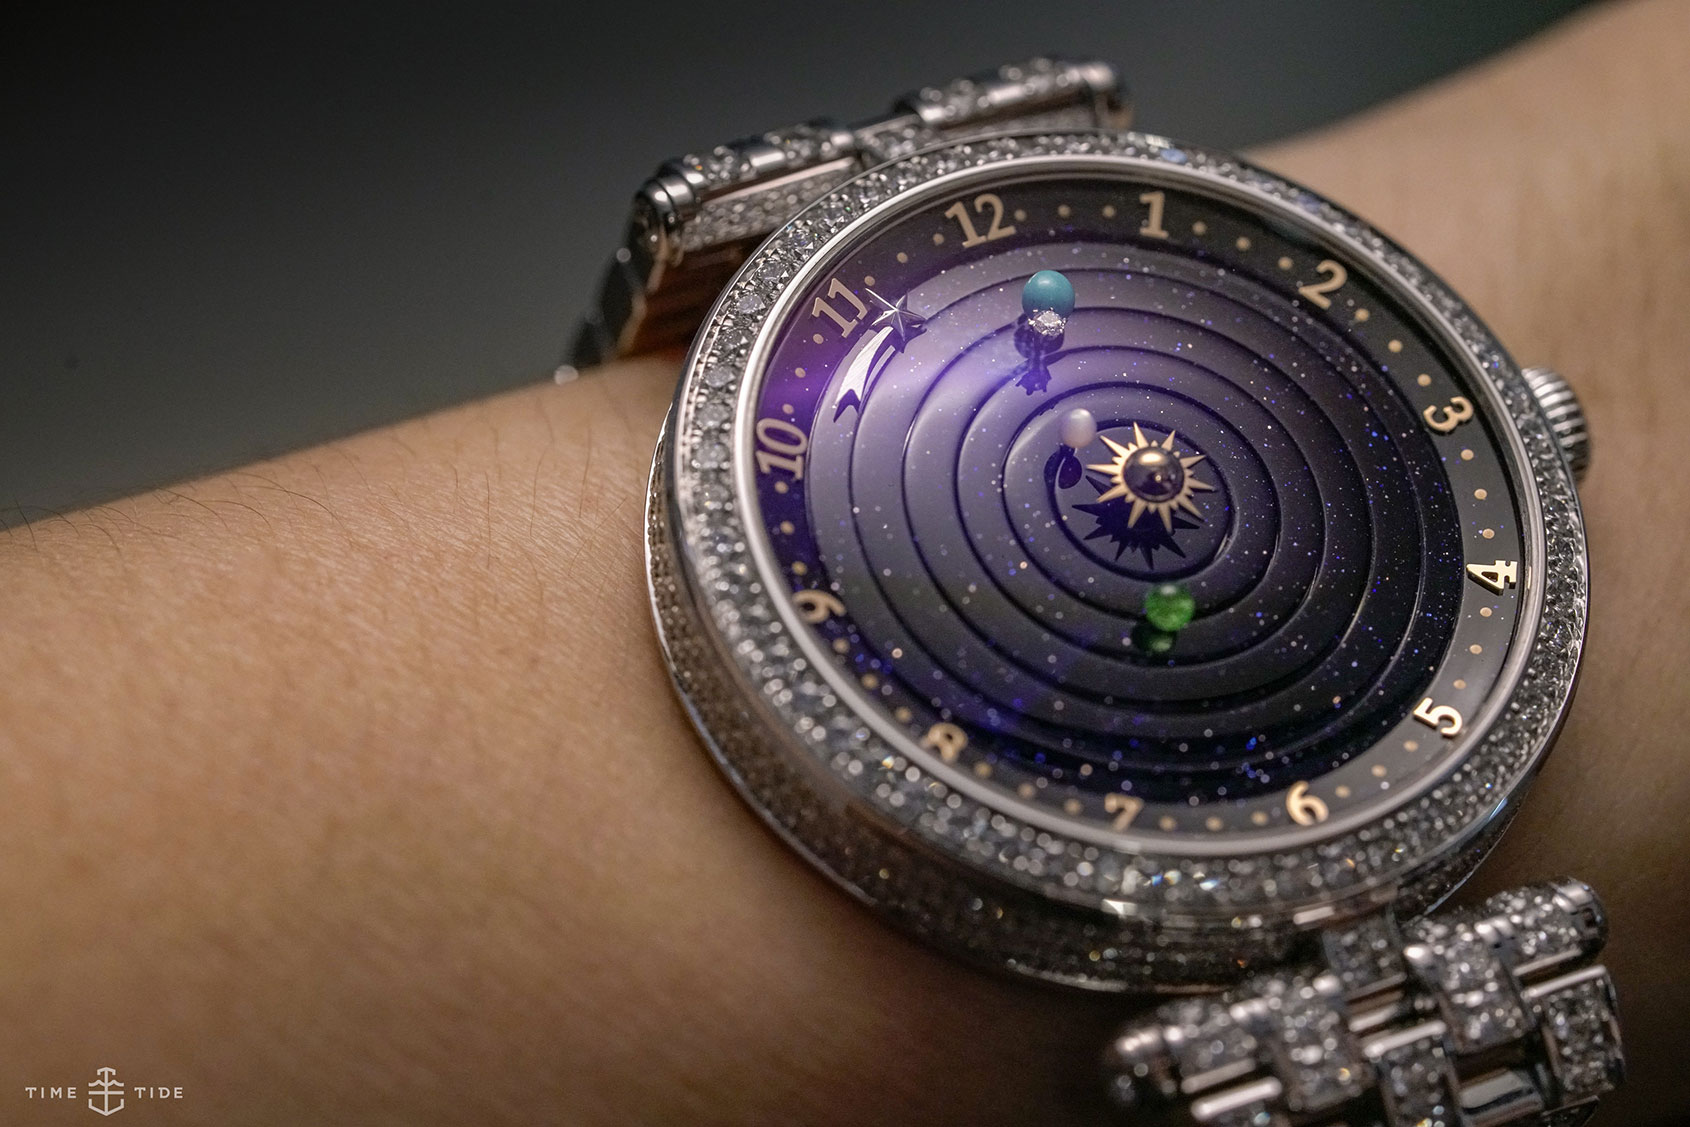 VAN CLEEF & ARPELS LADY ARPELS PLANÉTARIUM POETIC COMPLICATIONS - best watches without hands